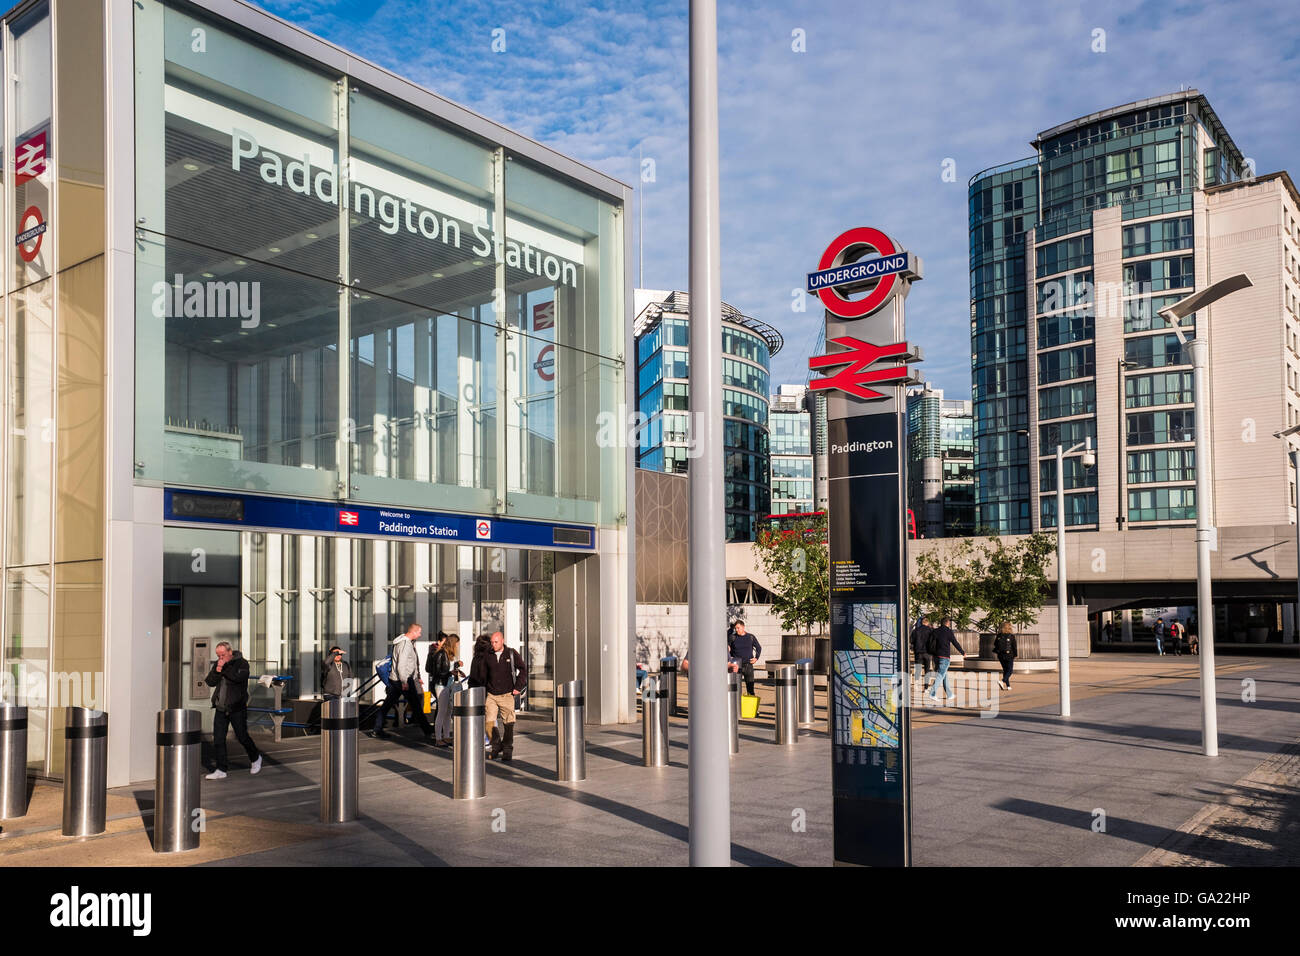 Paddington Station, London, England, U.K Stockfoto